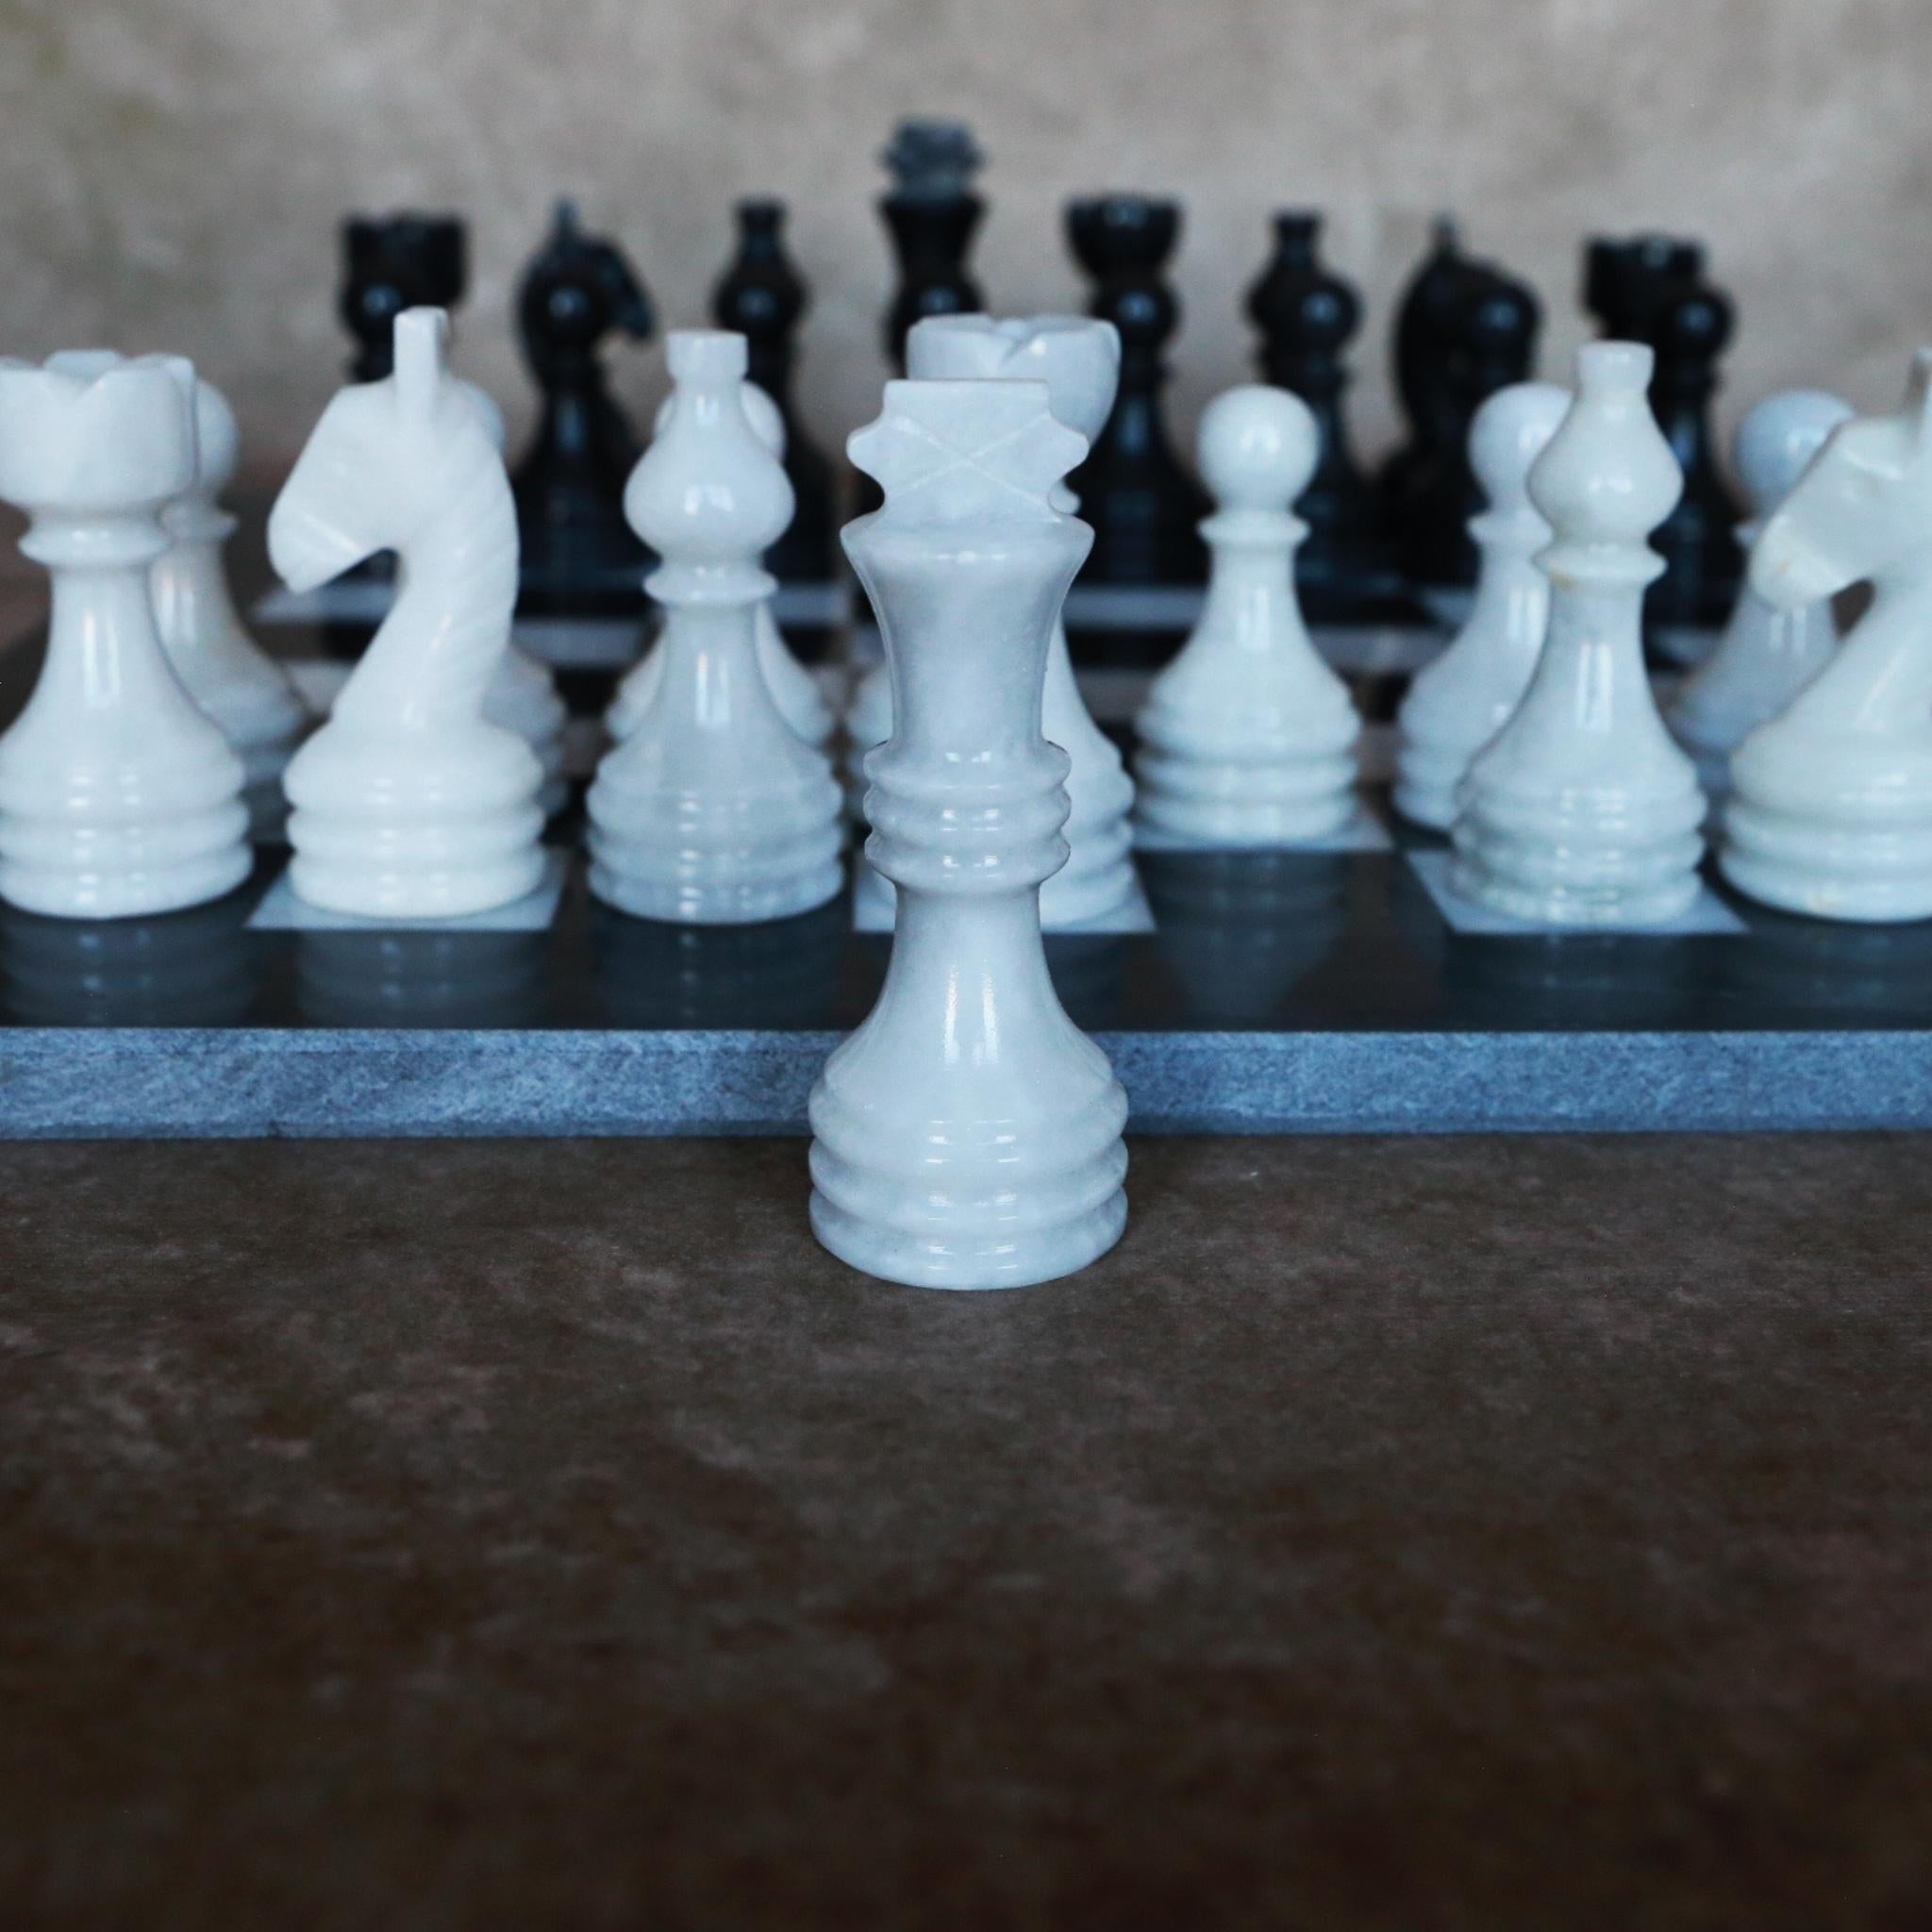 Black and White Marble Handmade Chess Set 15''